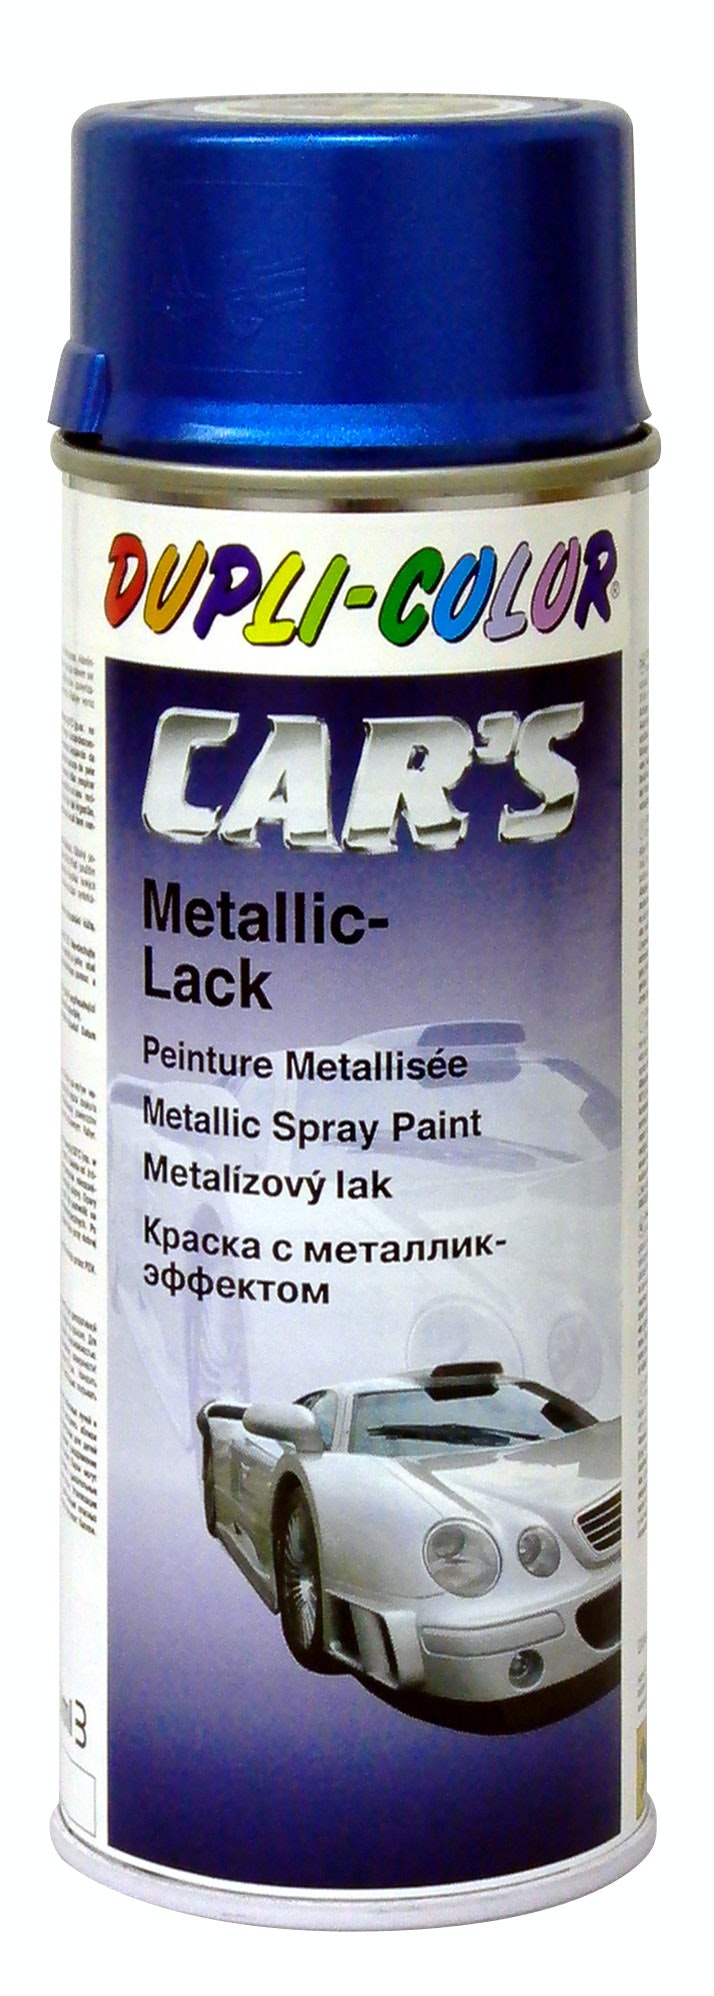 Cars Metallic-Lack schwarz matt 400ml